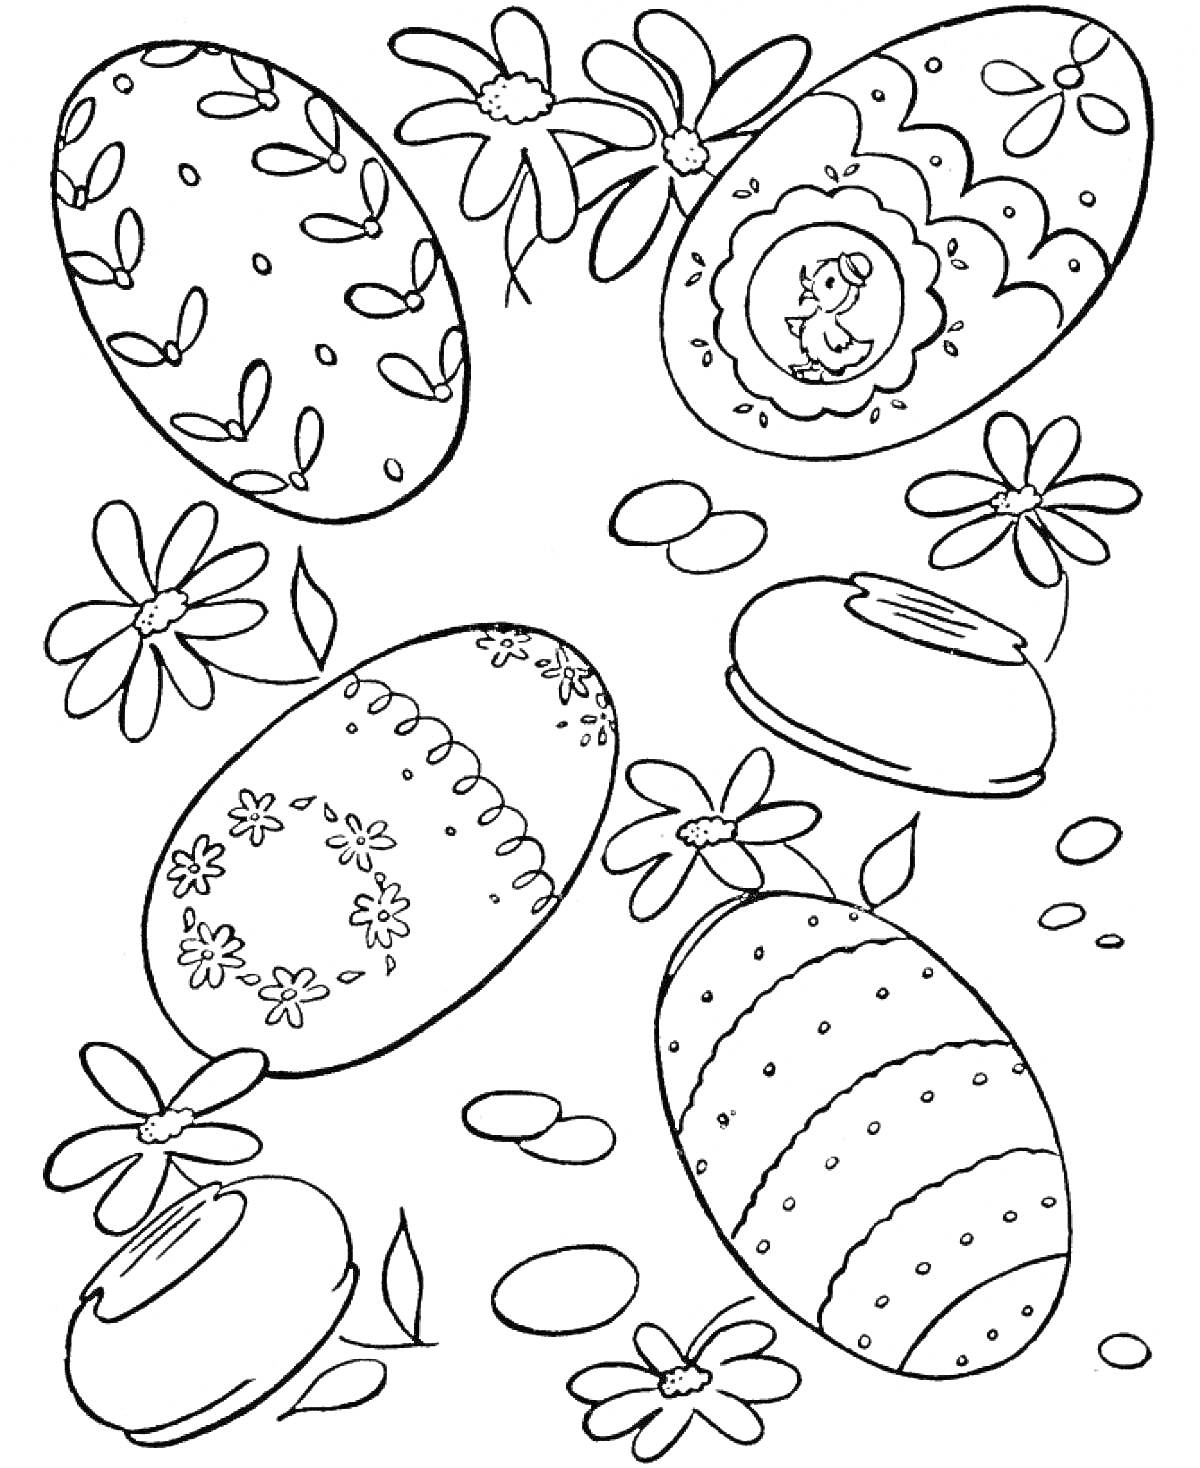 Раскраска Пасхальные яйца и цветы